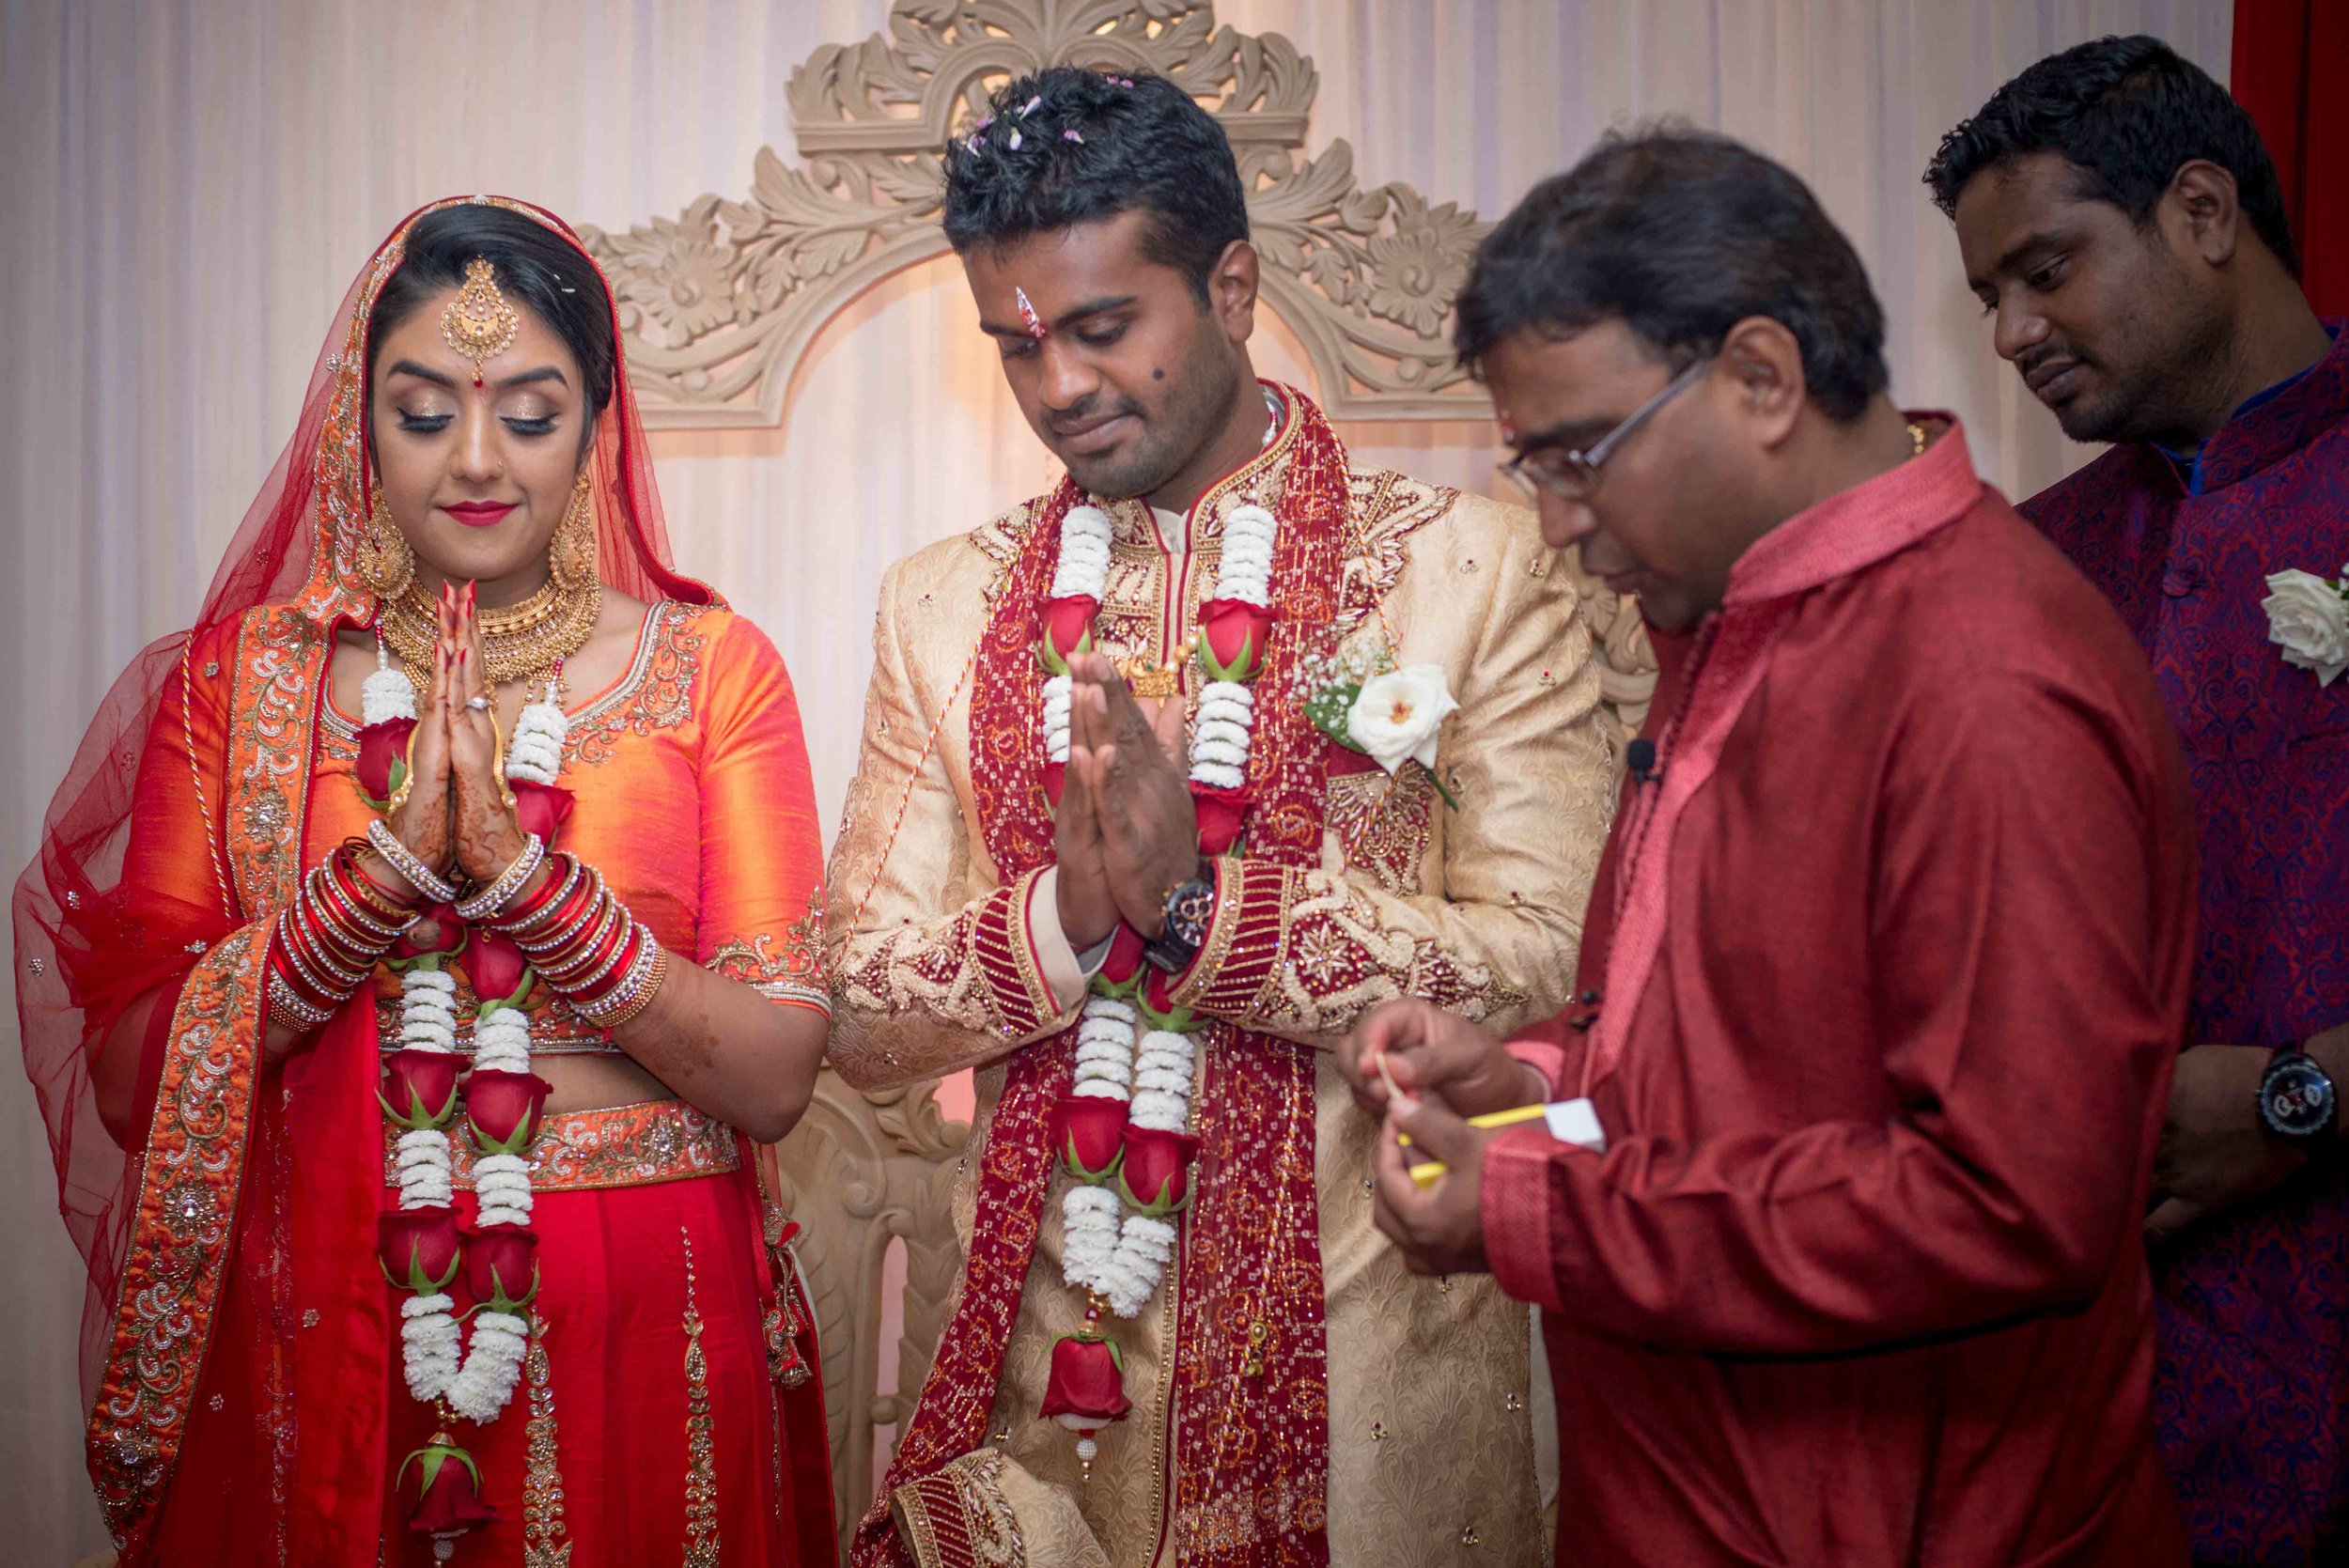 premier-banquetting-london-Hindu-asian-wedding-photographer-natalia-smith-photography-33.jpg